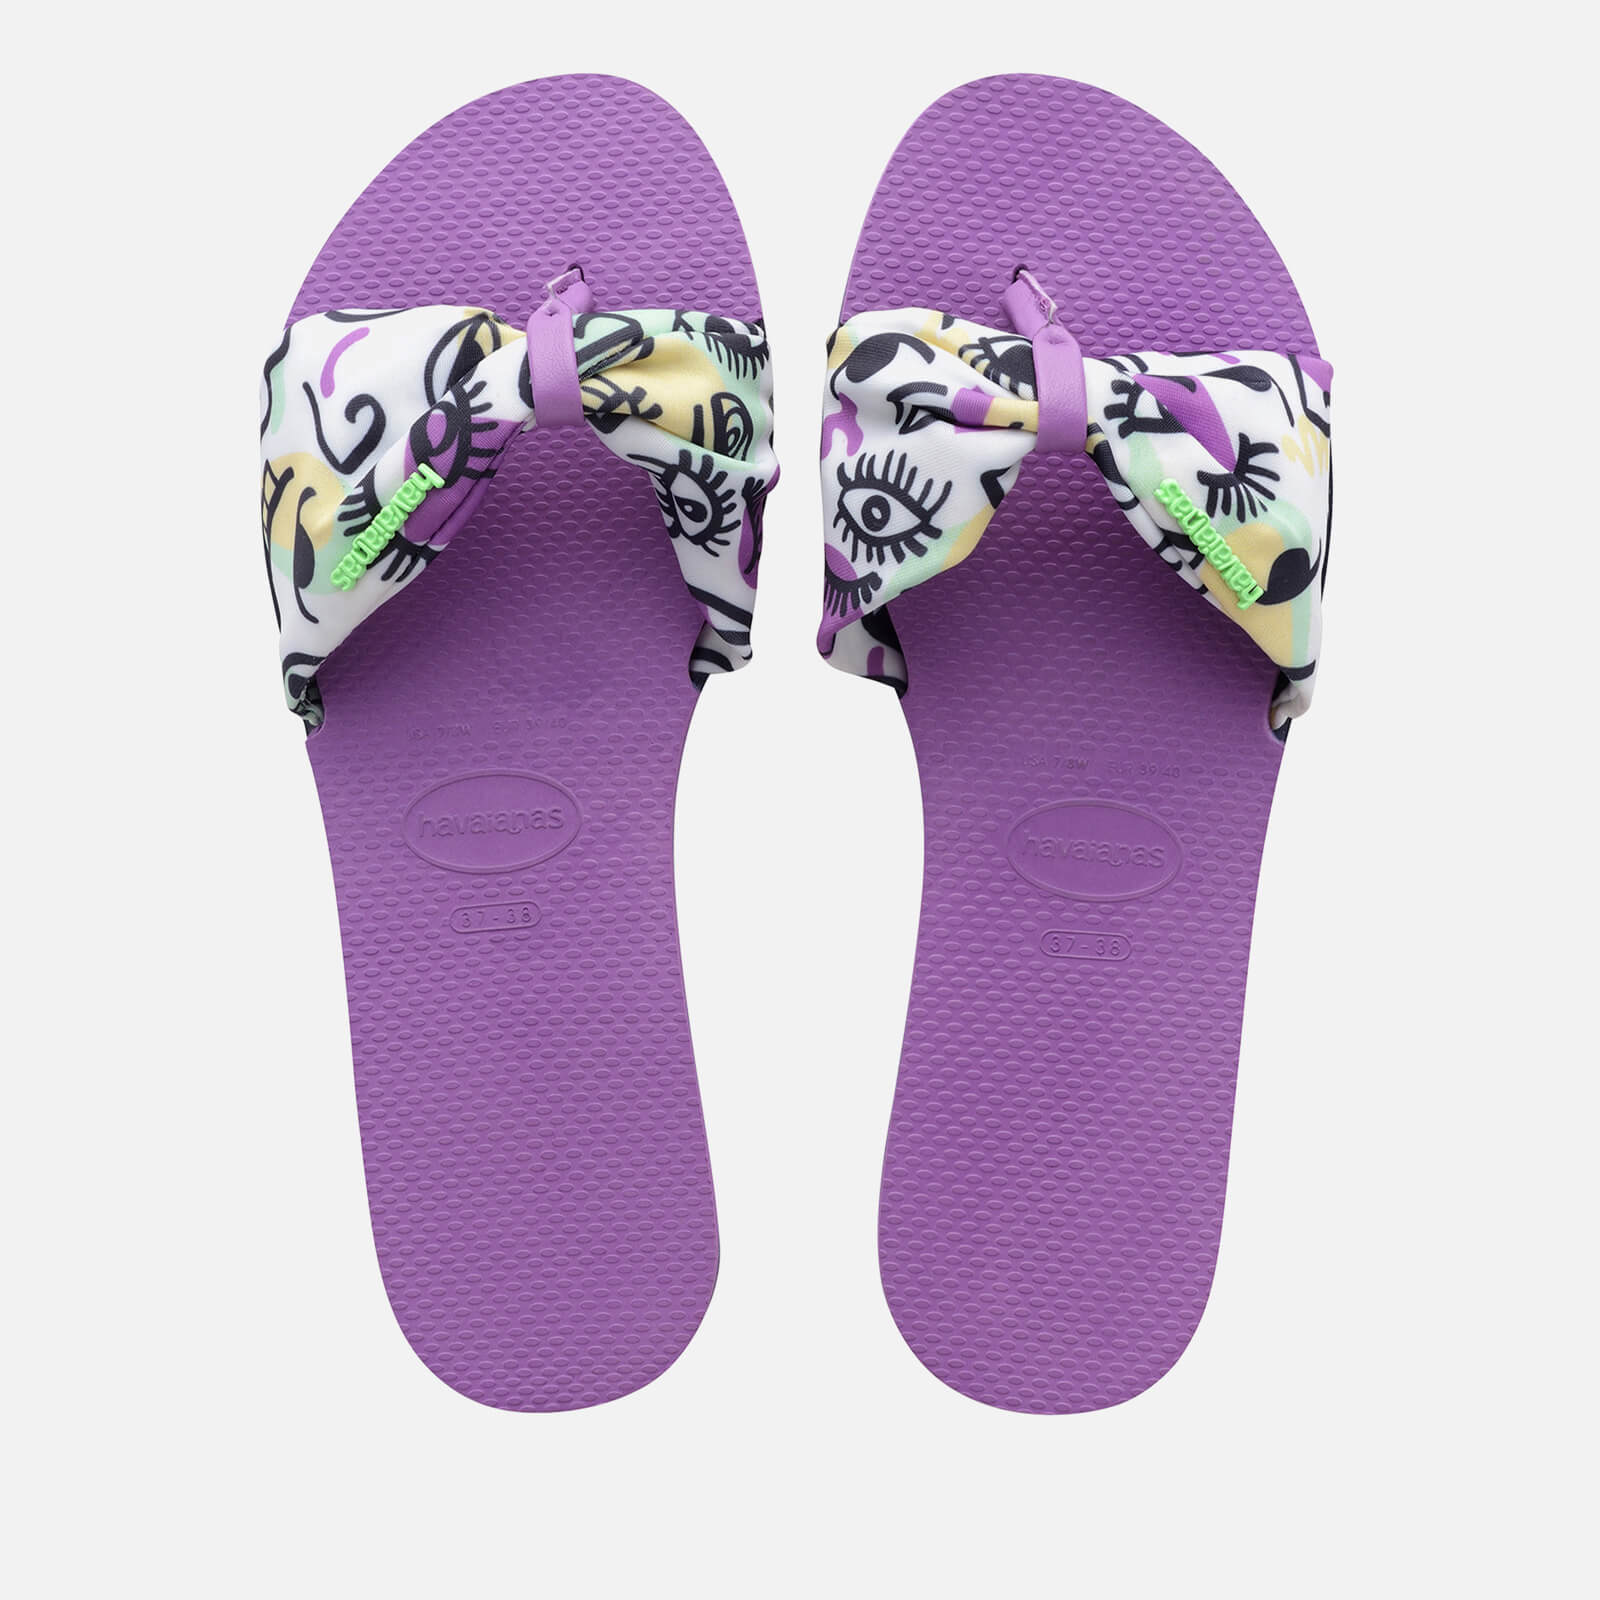 havaianas womens saint tropez sandals - purple - uk 5 violett